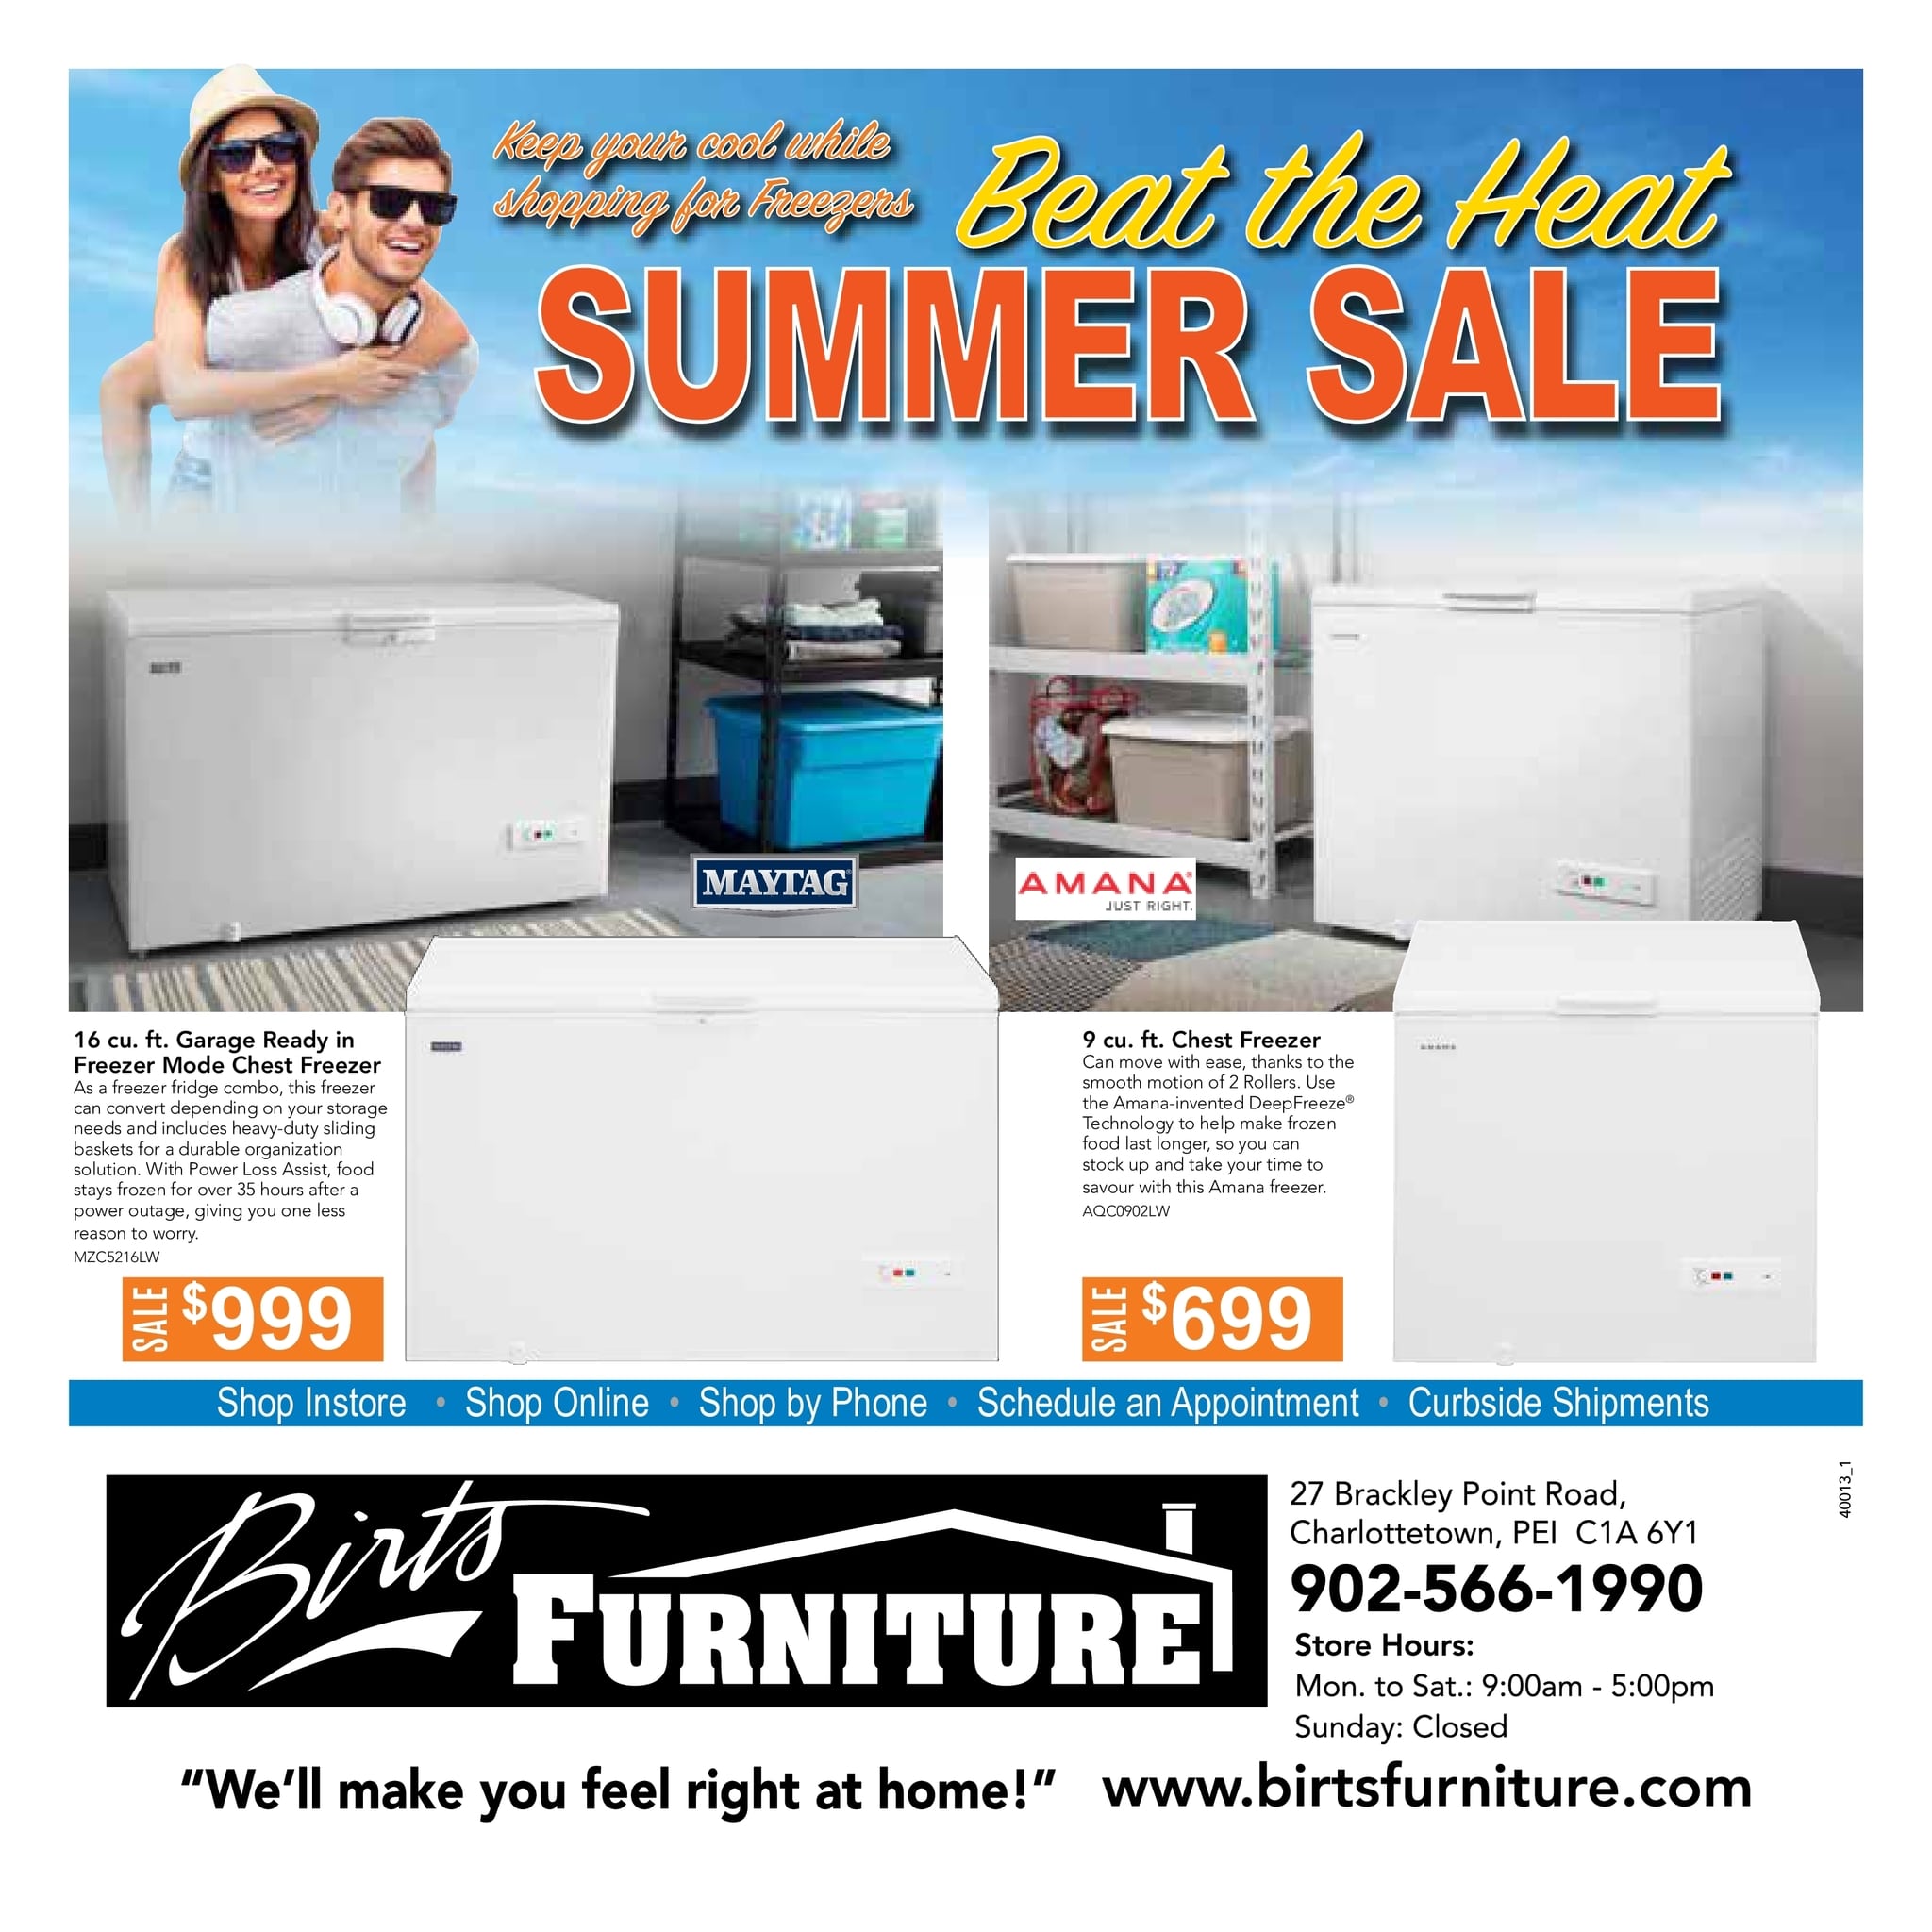 Birts Furniture - Summer Sale - Page 4